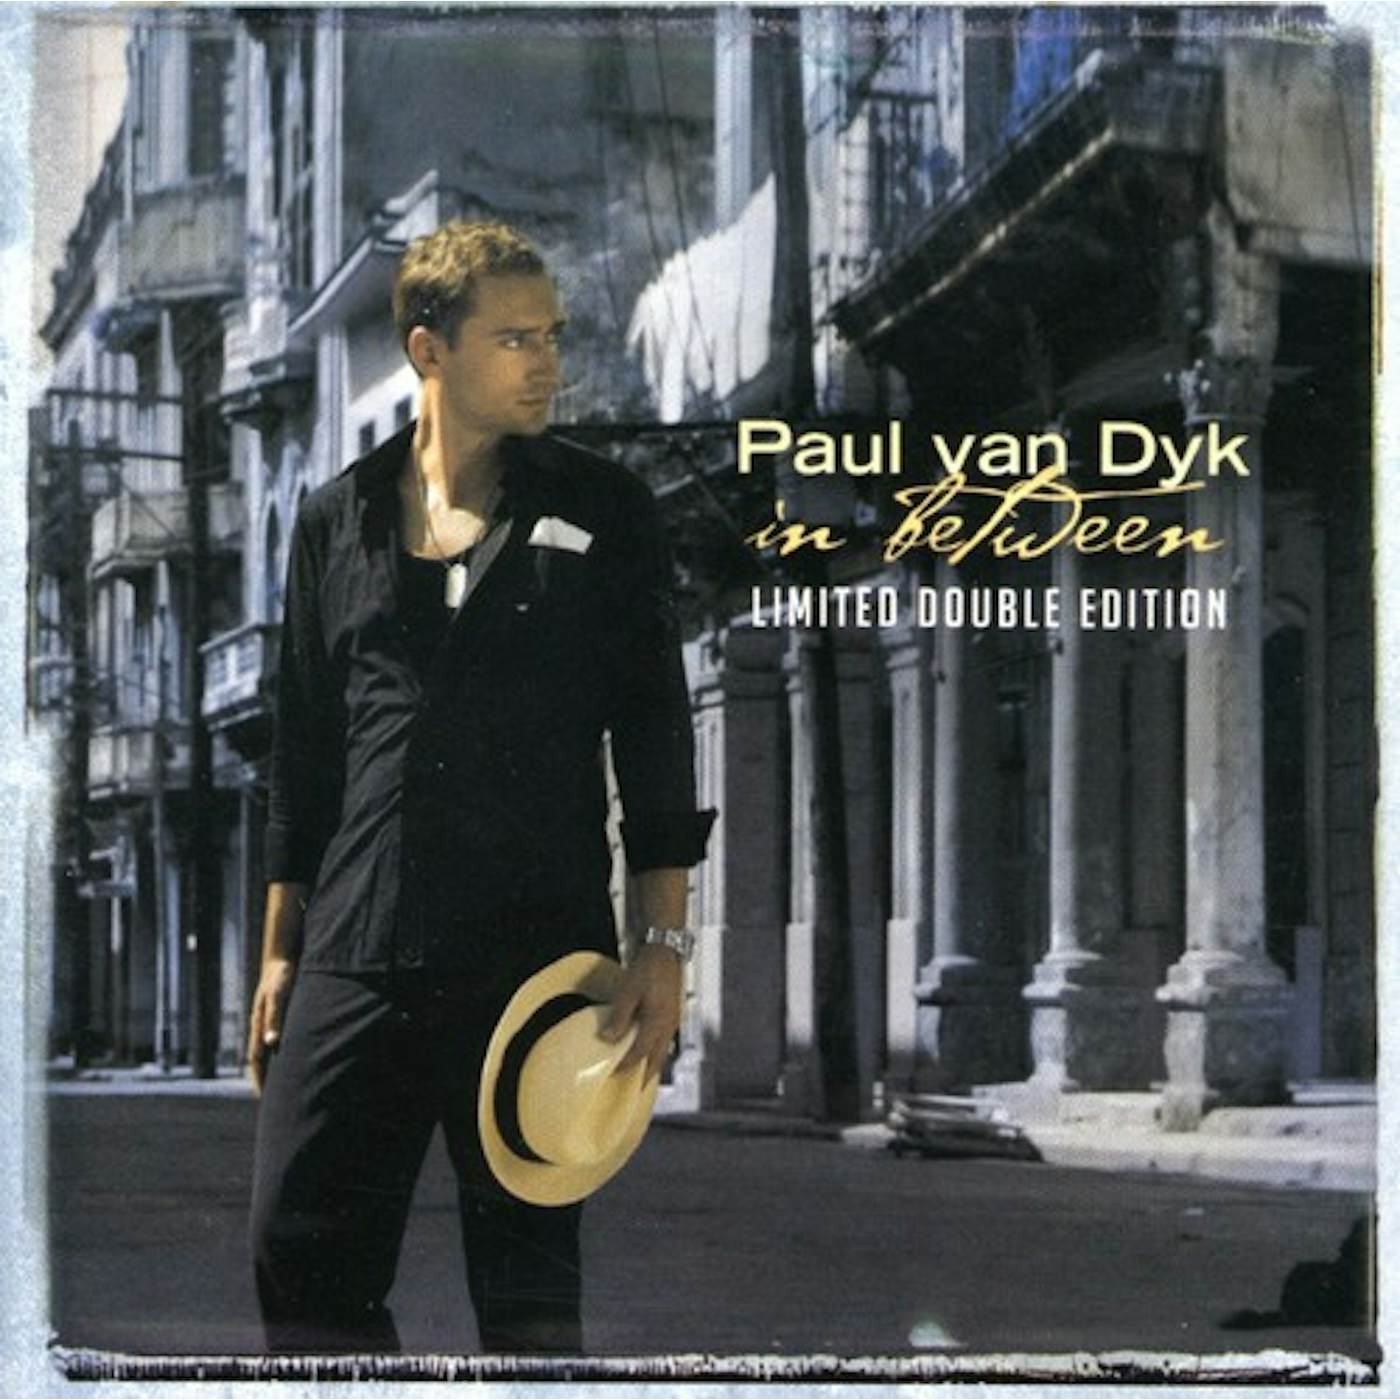 Трек paul. Paul van Dyk – in between (Limited Double Edition). In between пол Ван Дайк. Пол Ван Дайк альбомы. Paul van Dyk обложка.